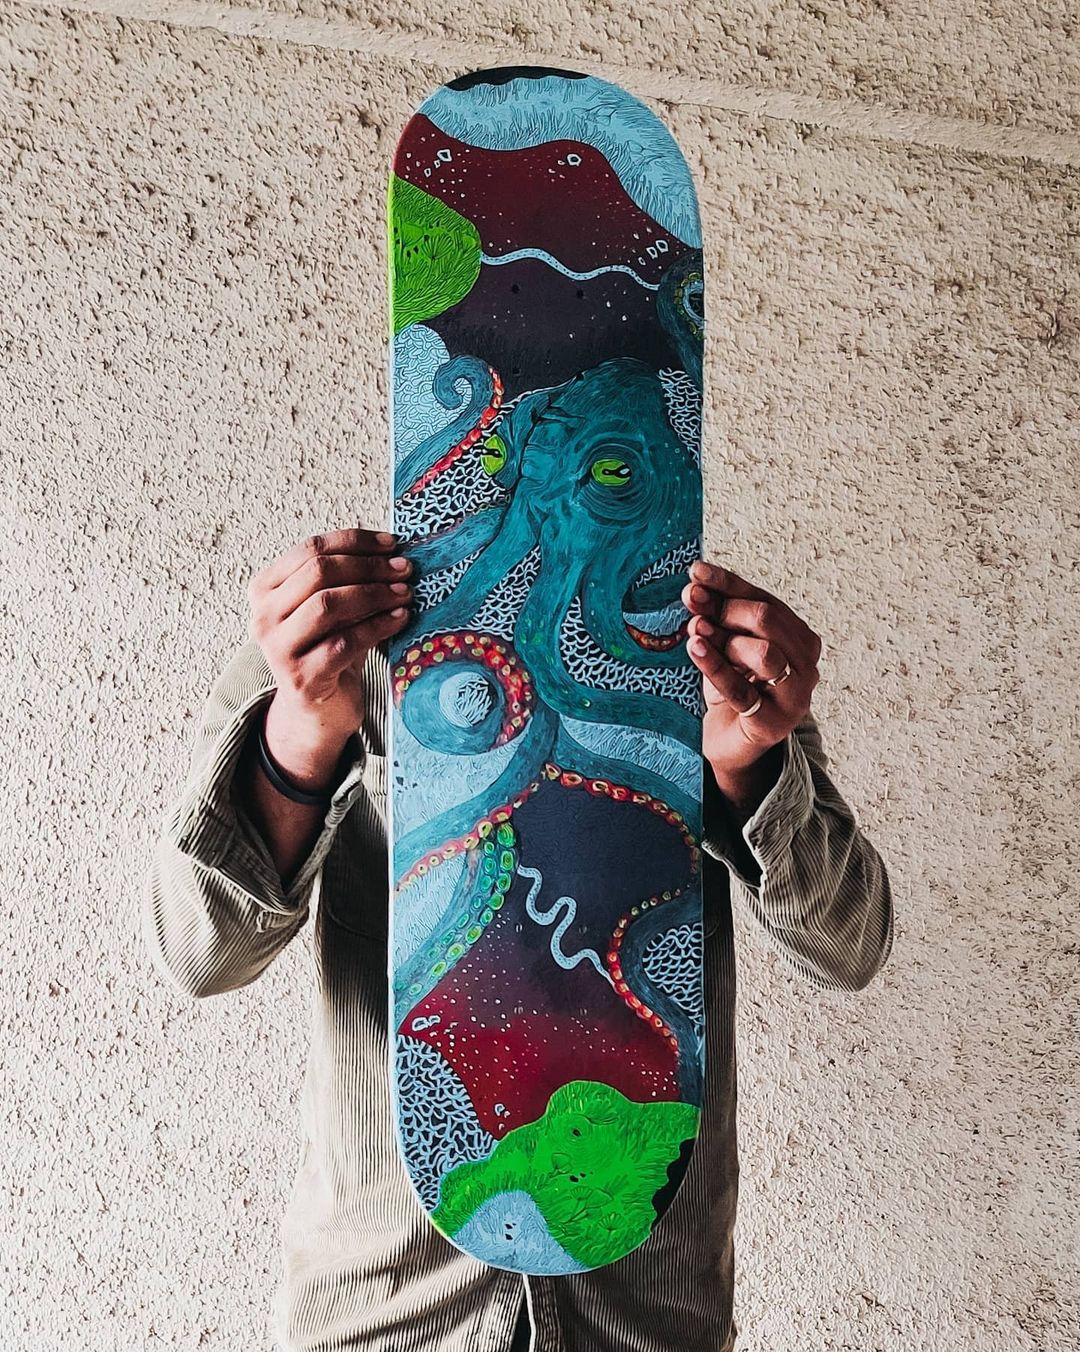 Octopi - Skate deck (Hand Painted) Decor Slimjim Skins